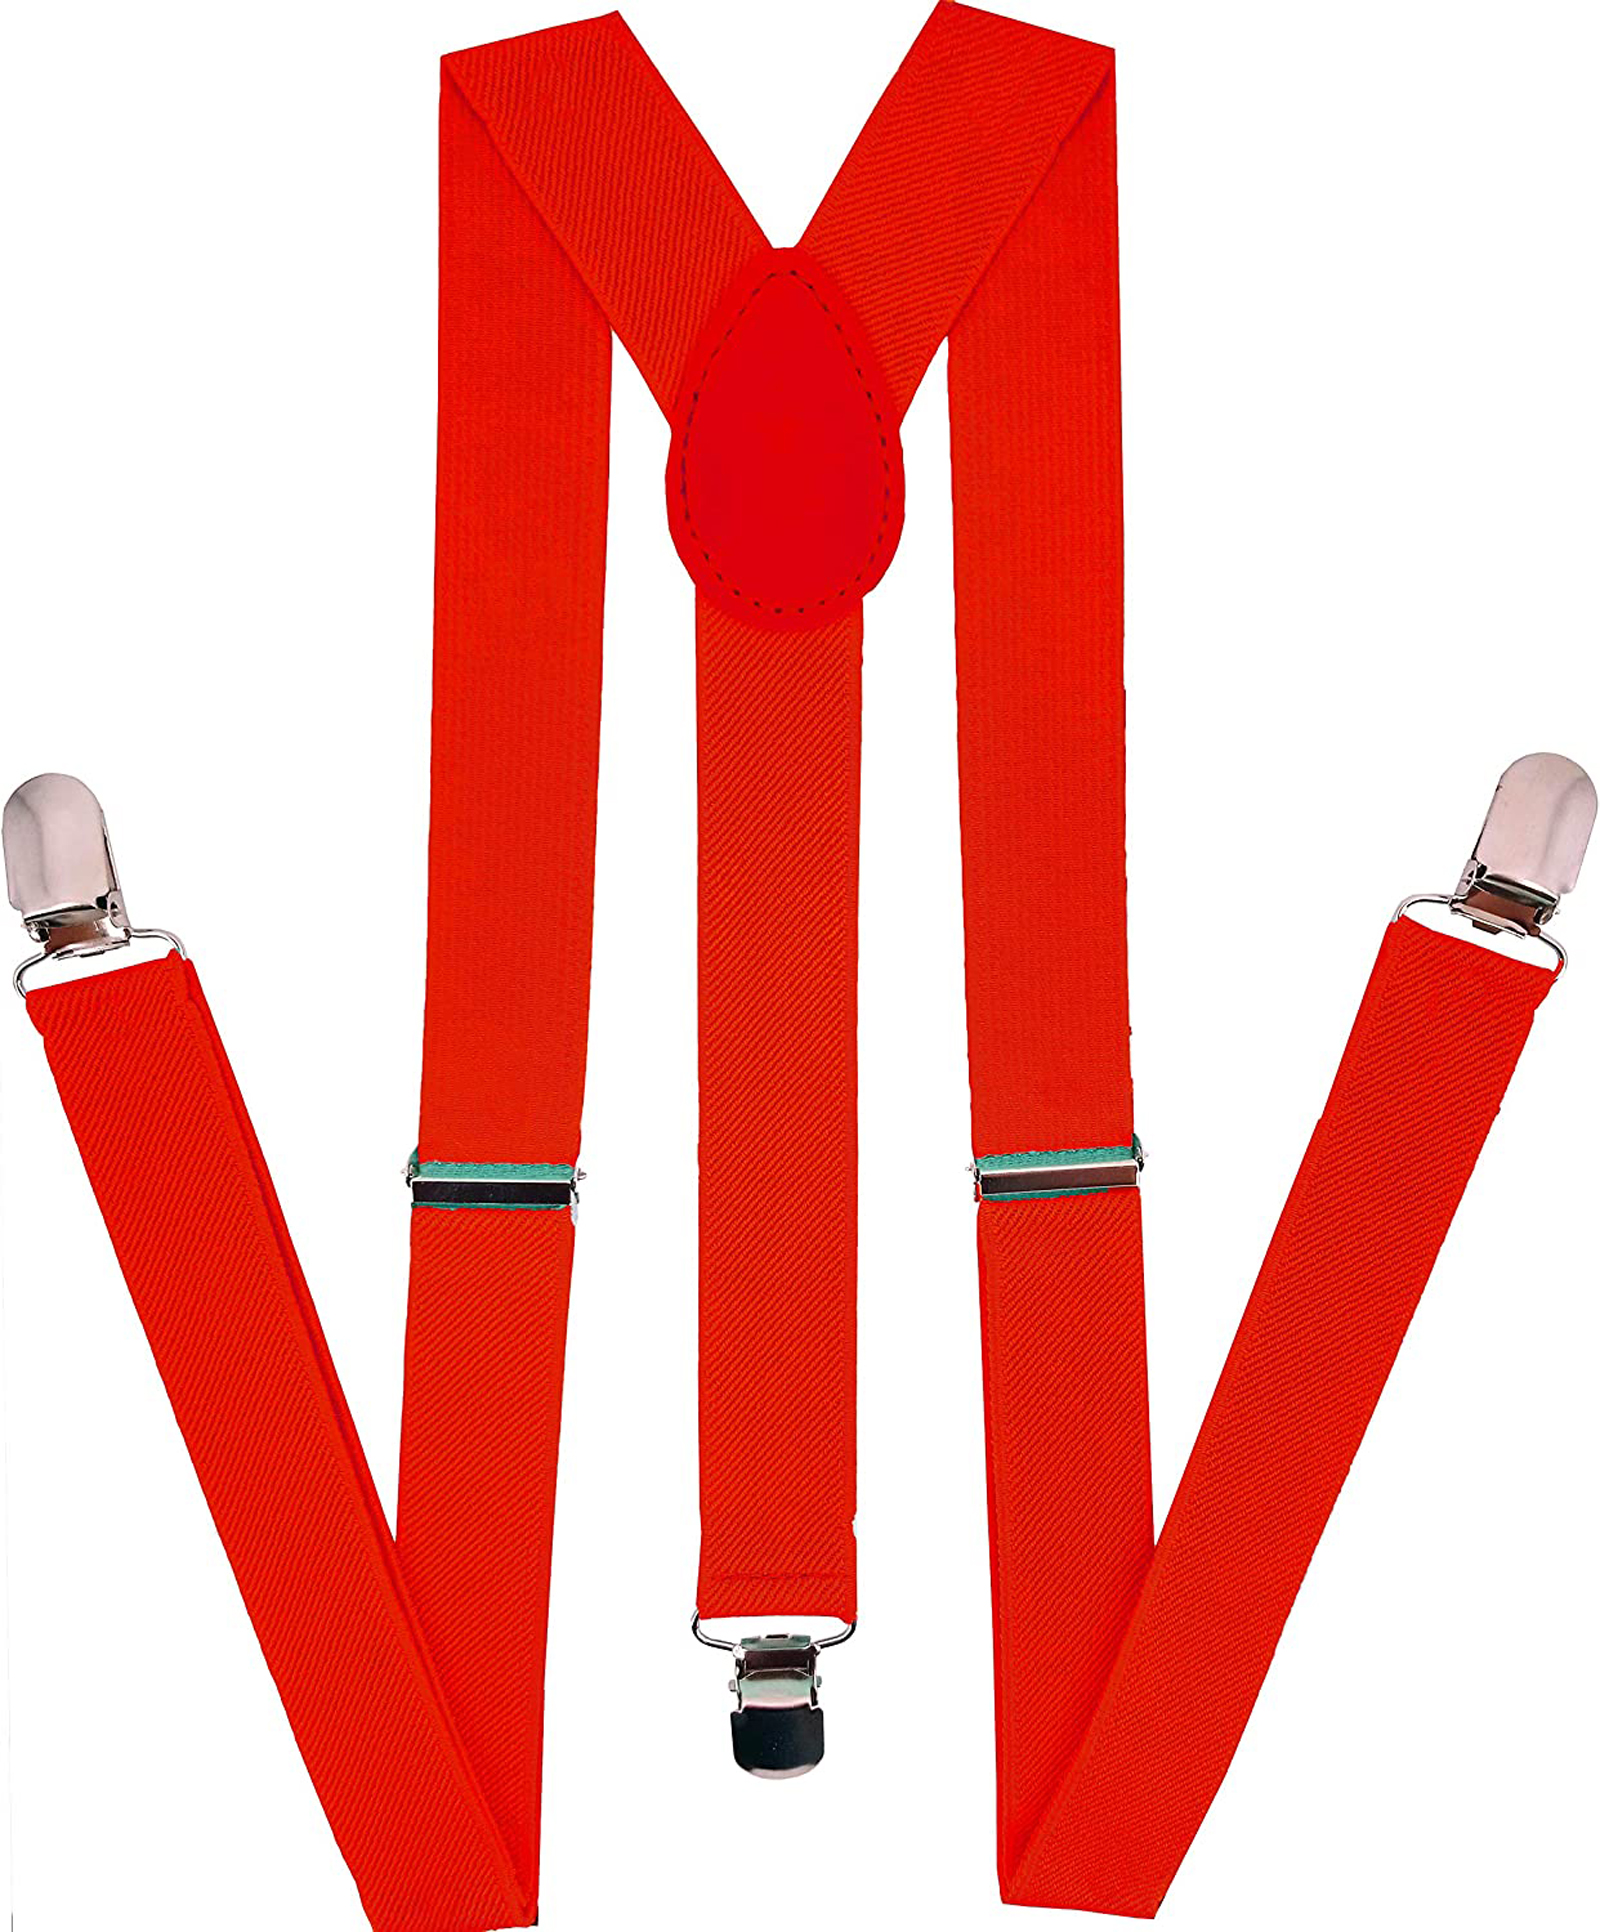 Suspenders for Men, Elastic Adjustable 4 Back Construction 1 Inch